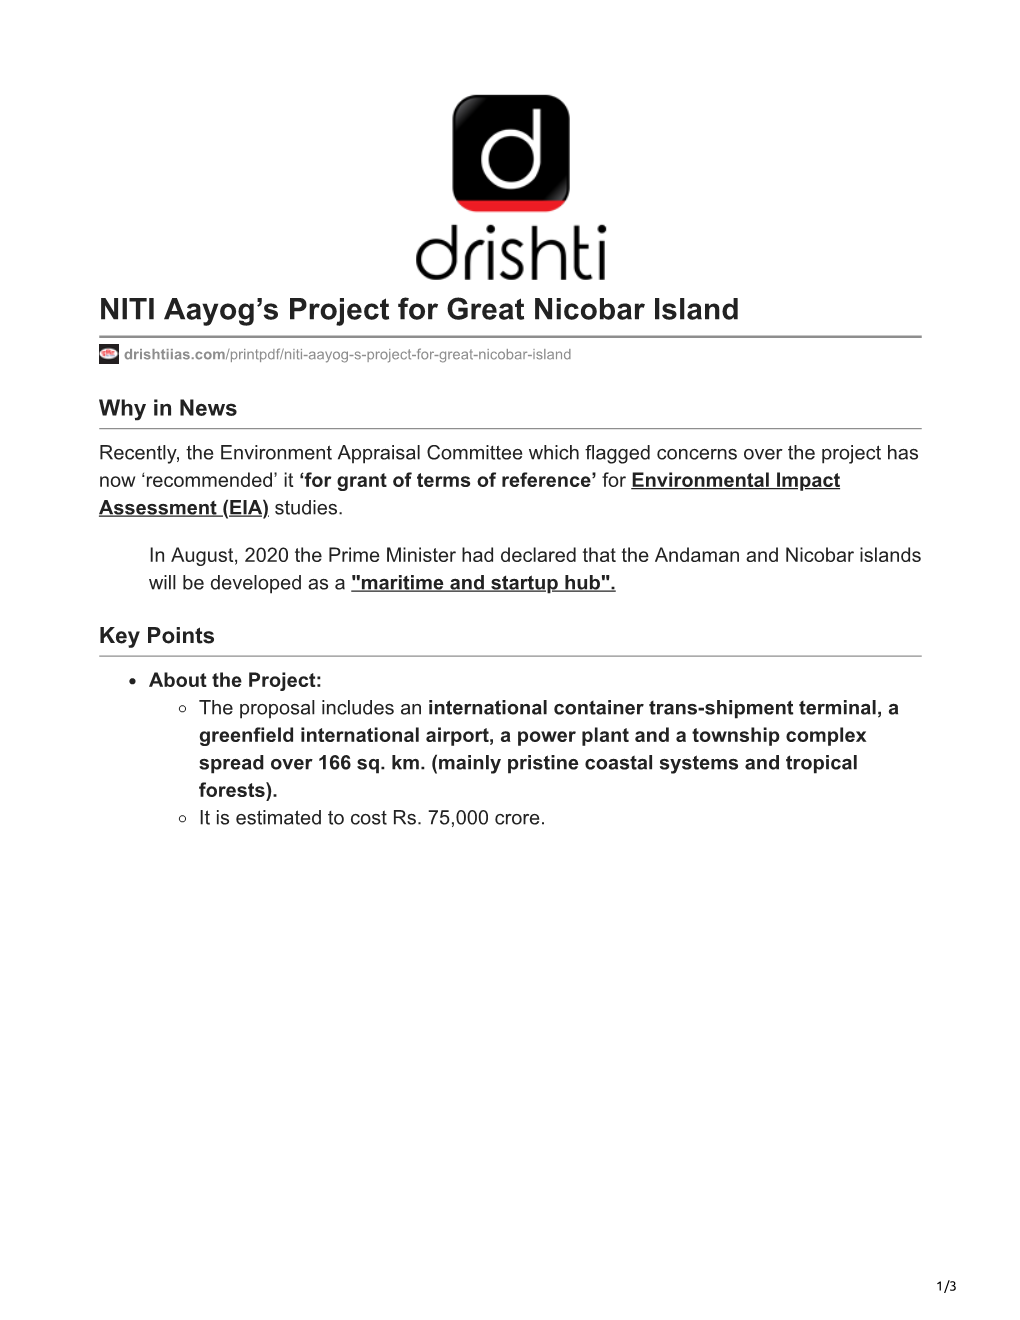 NITI Aayog's Project for Great Nicobar Island